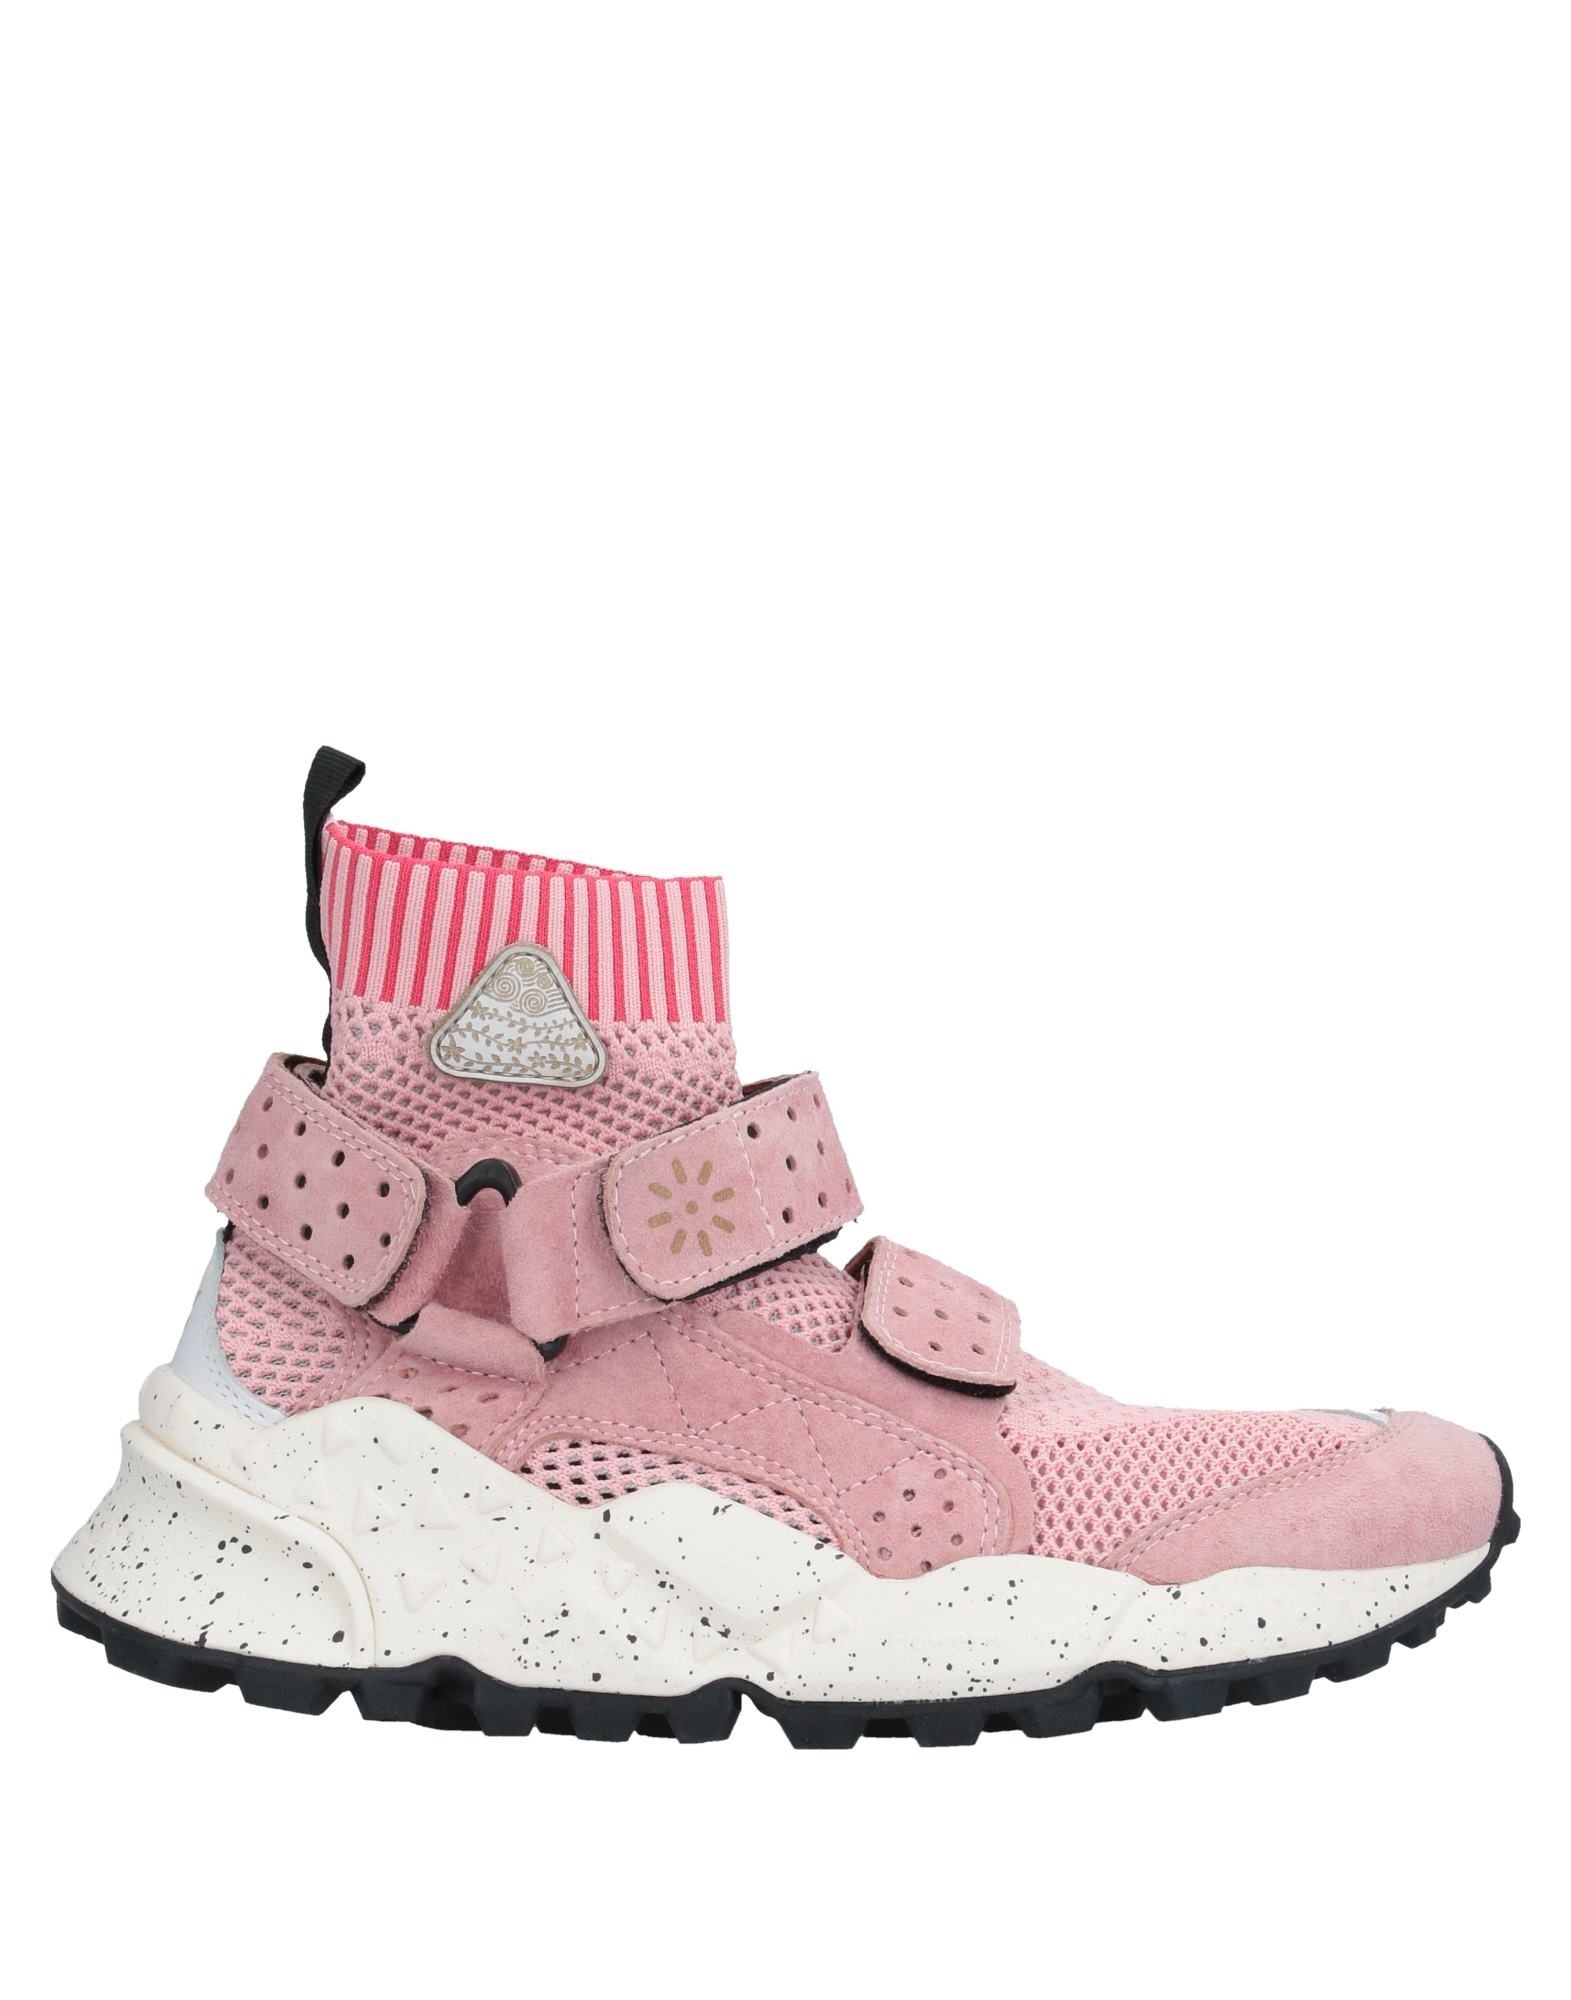 Flower Mountain Sneakers In Pink